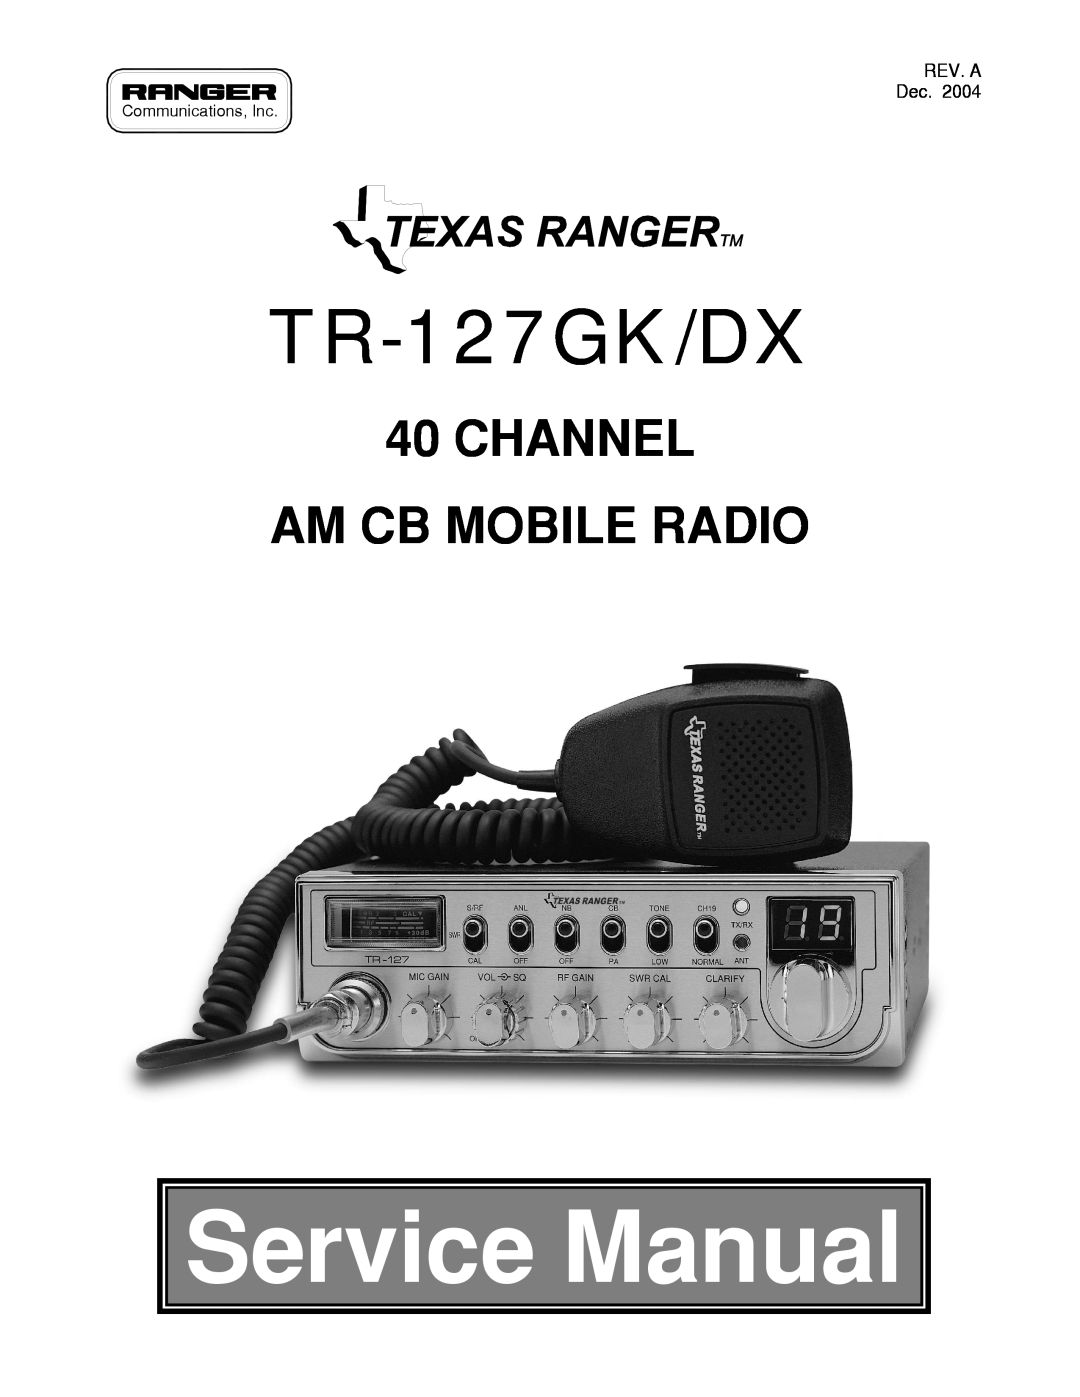 Ranger TR-127GK/DX service manual 40CHANNEL AM CB MOBILE RADIO, REV. A Dec, Communications, Inc 